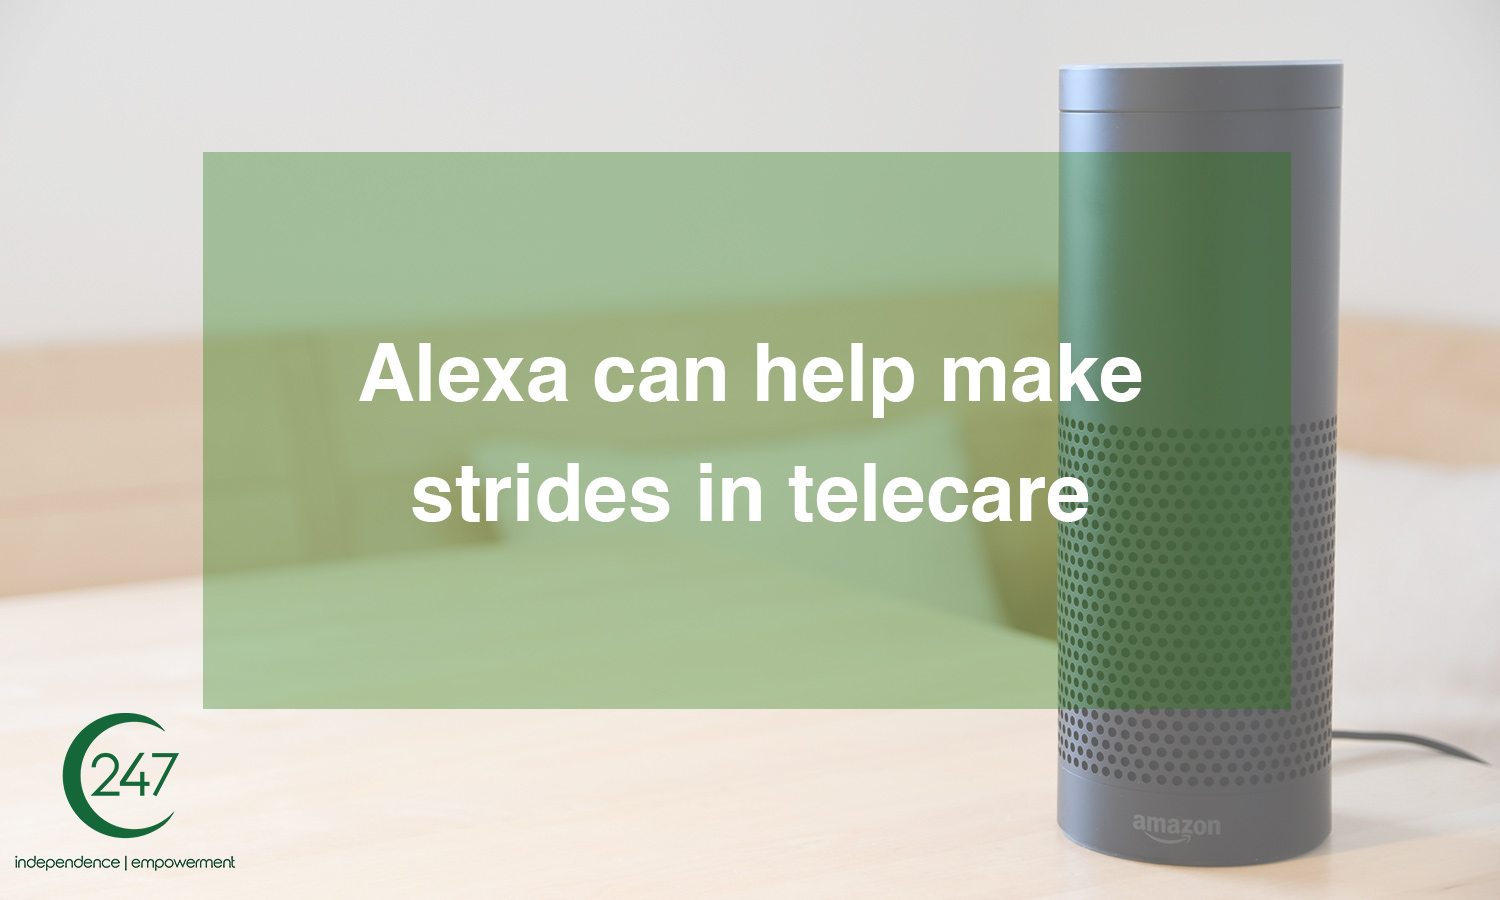 Alexa can help make strides in telecare